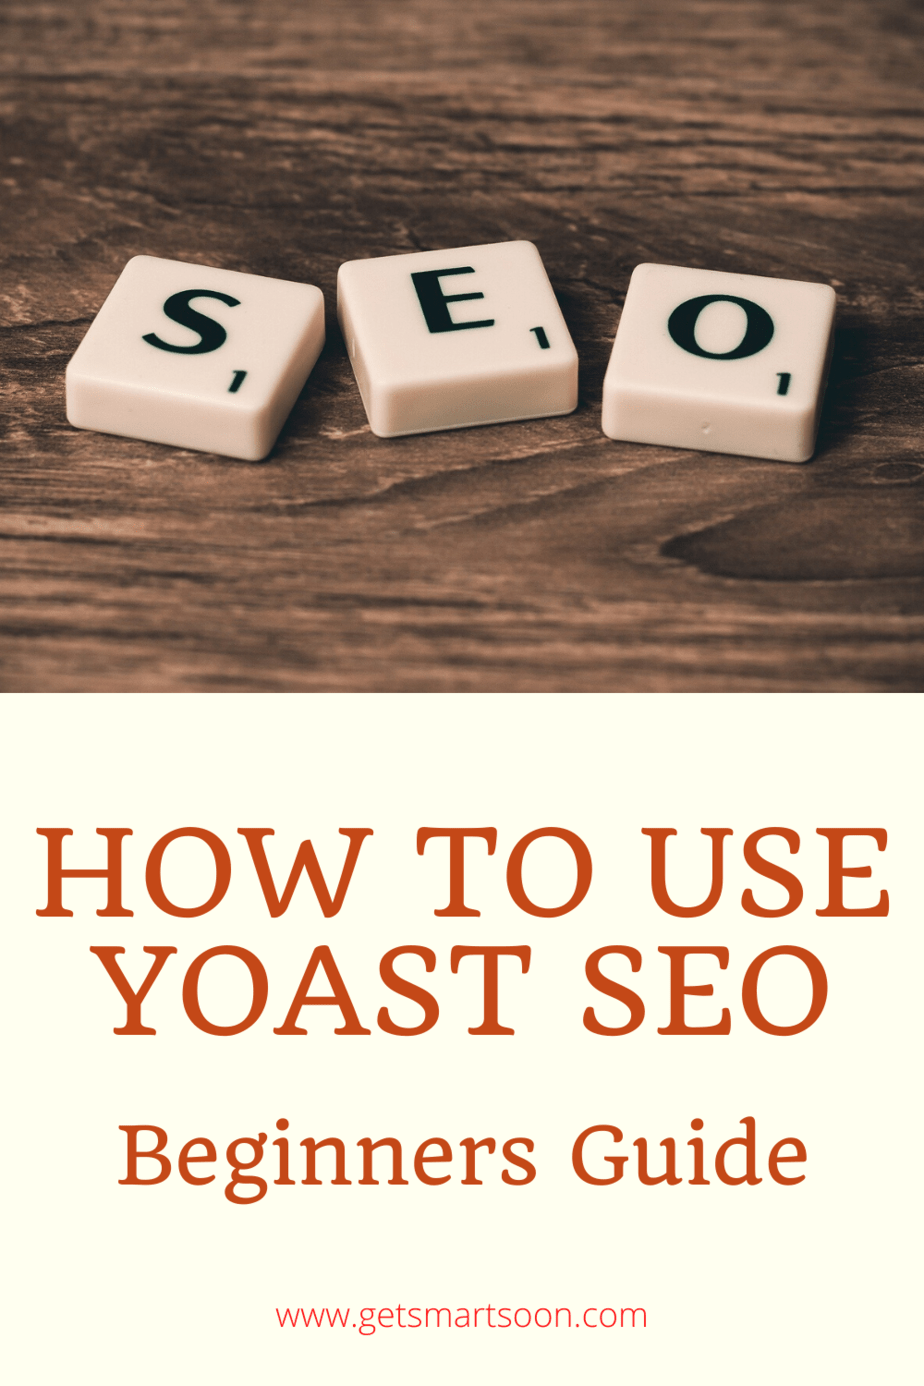 How to Use Yoast SEO: Beginners Guide